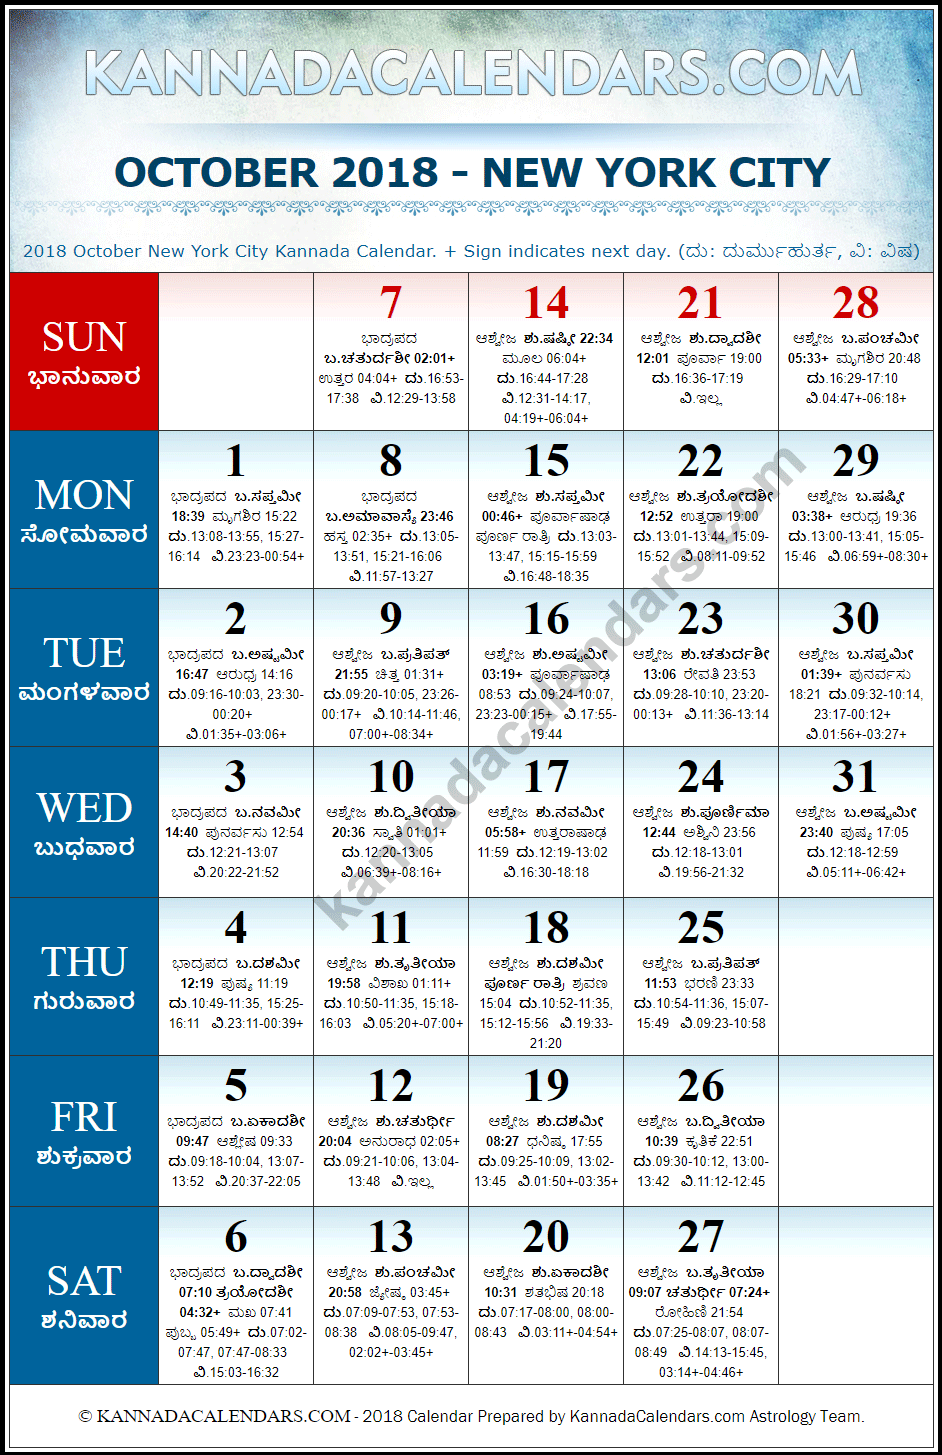 October 2018 Kannada Calendar for New York, USA